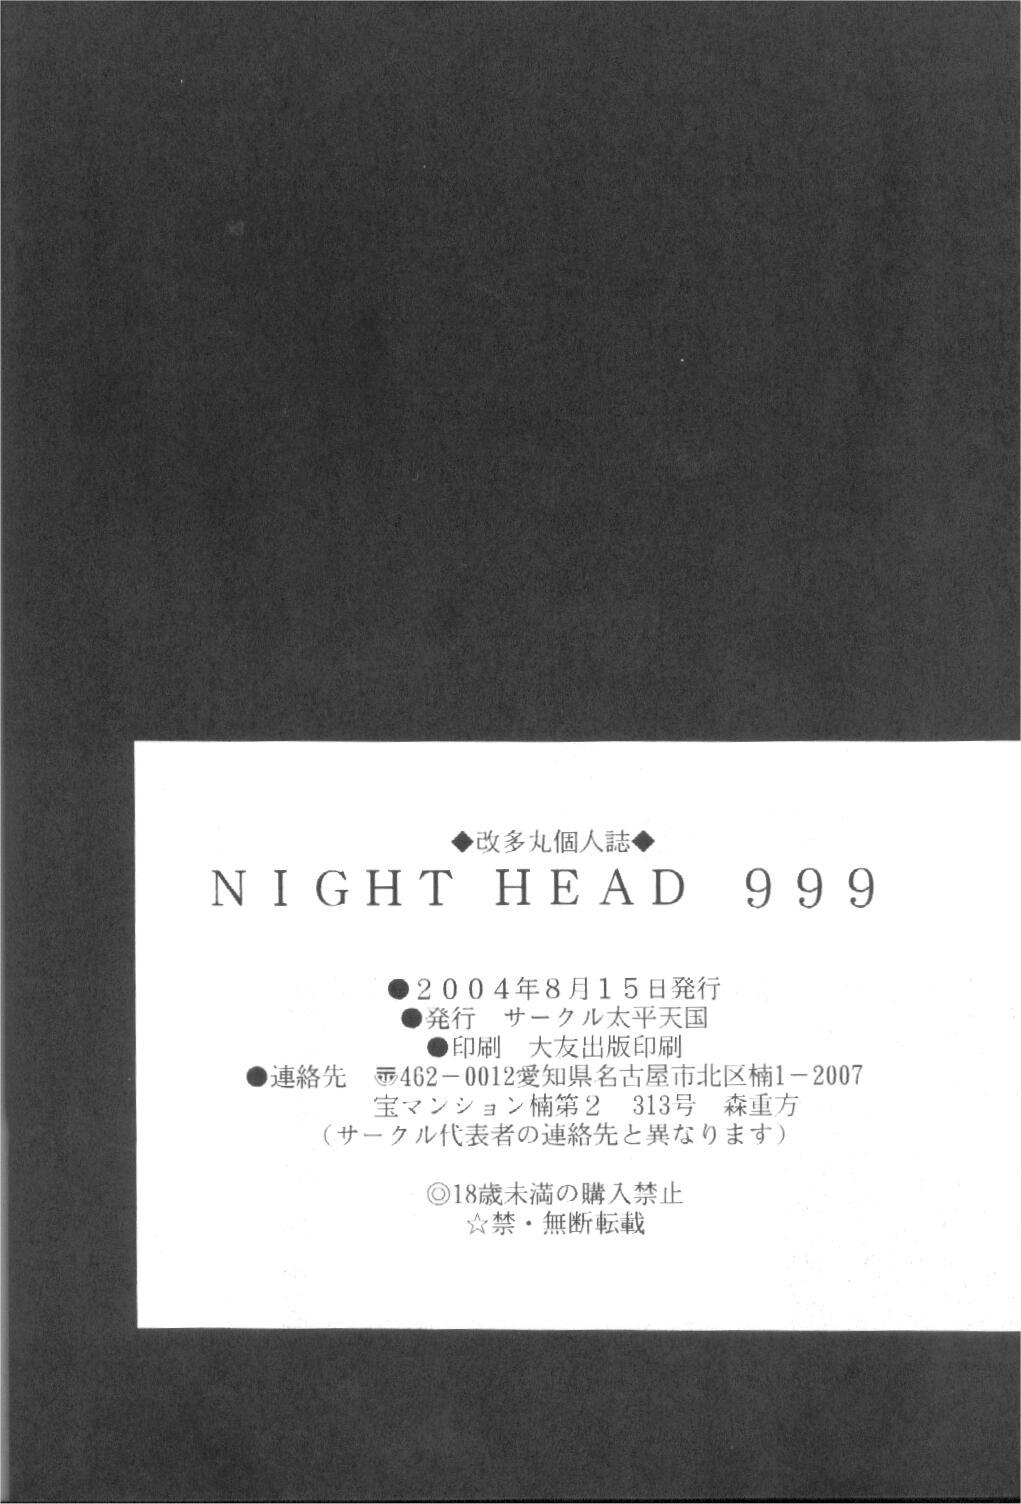 NIGHT HEAD 999 25